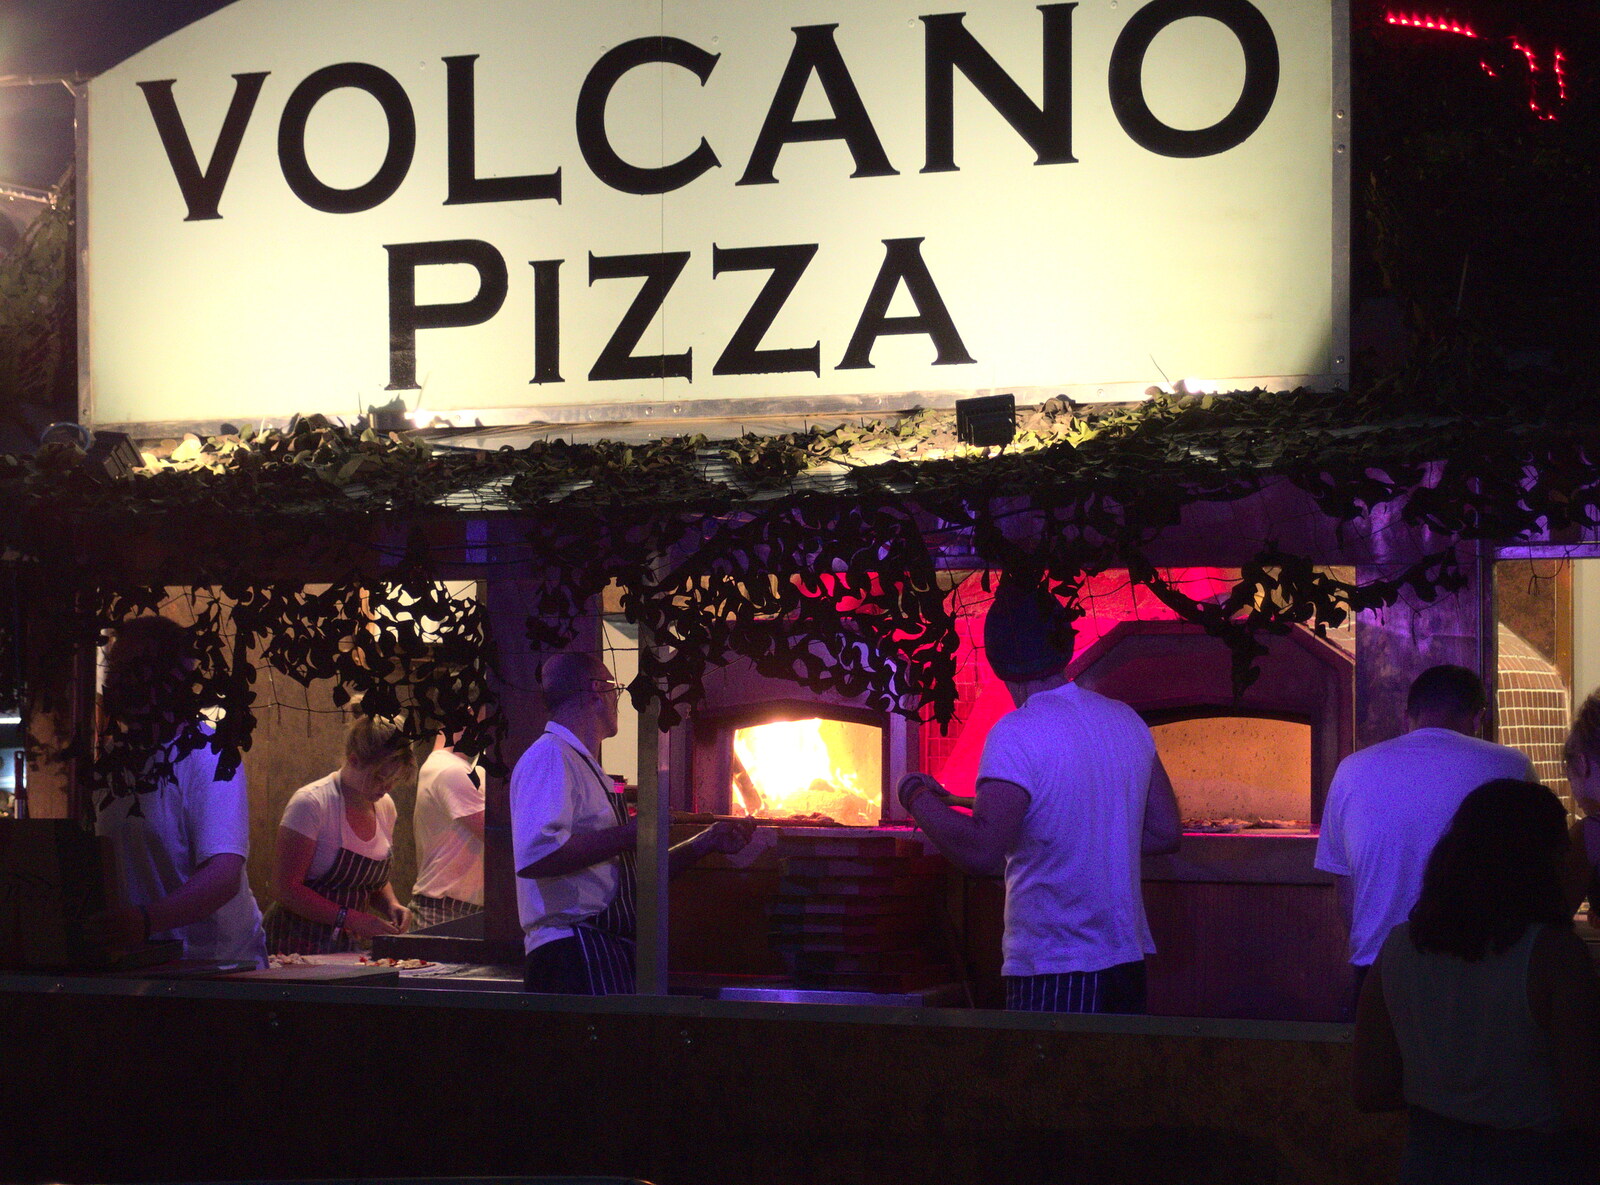 Volcano pizza from Latitude Festival, Henham Park, Southwold, Suffolk - 17th July 2014